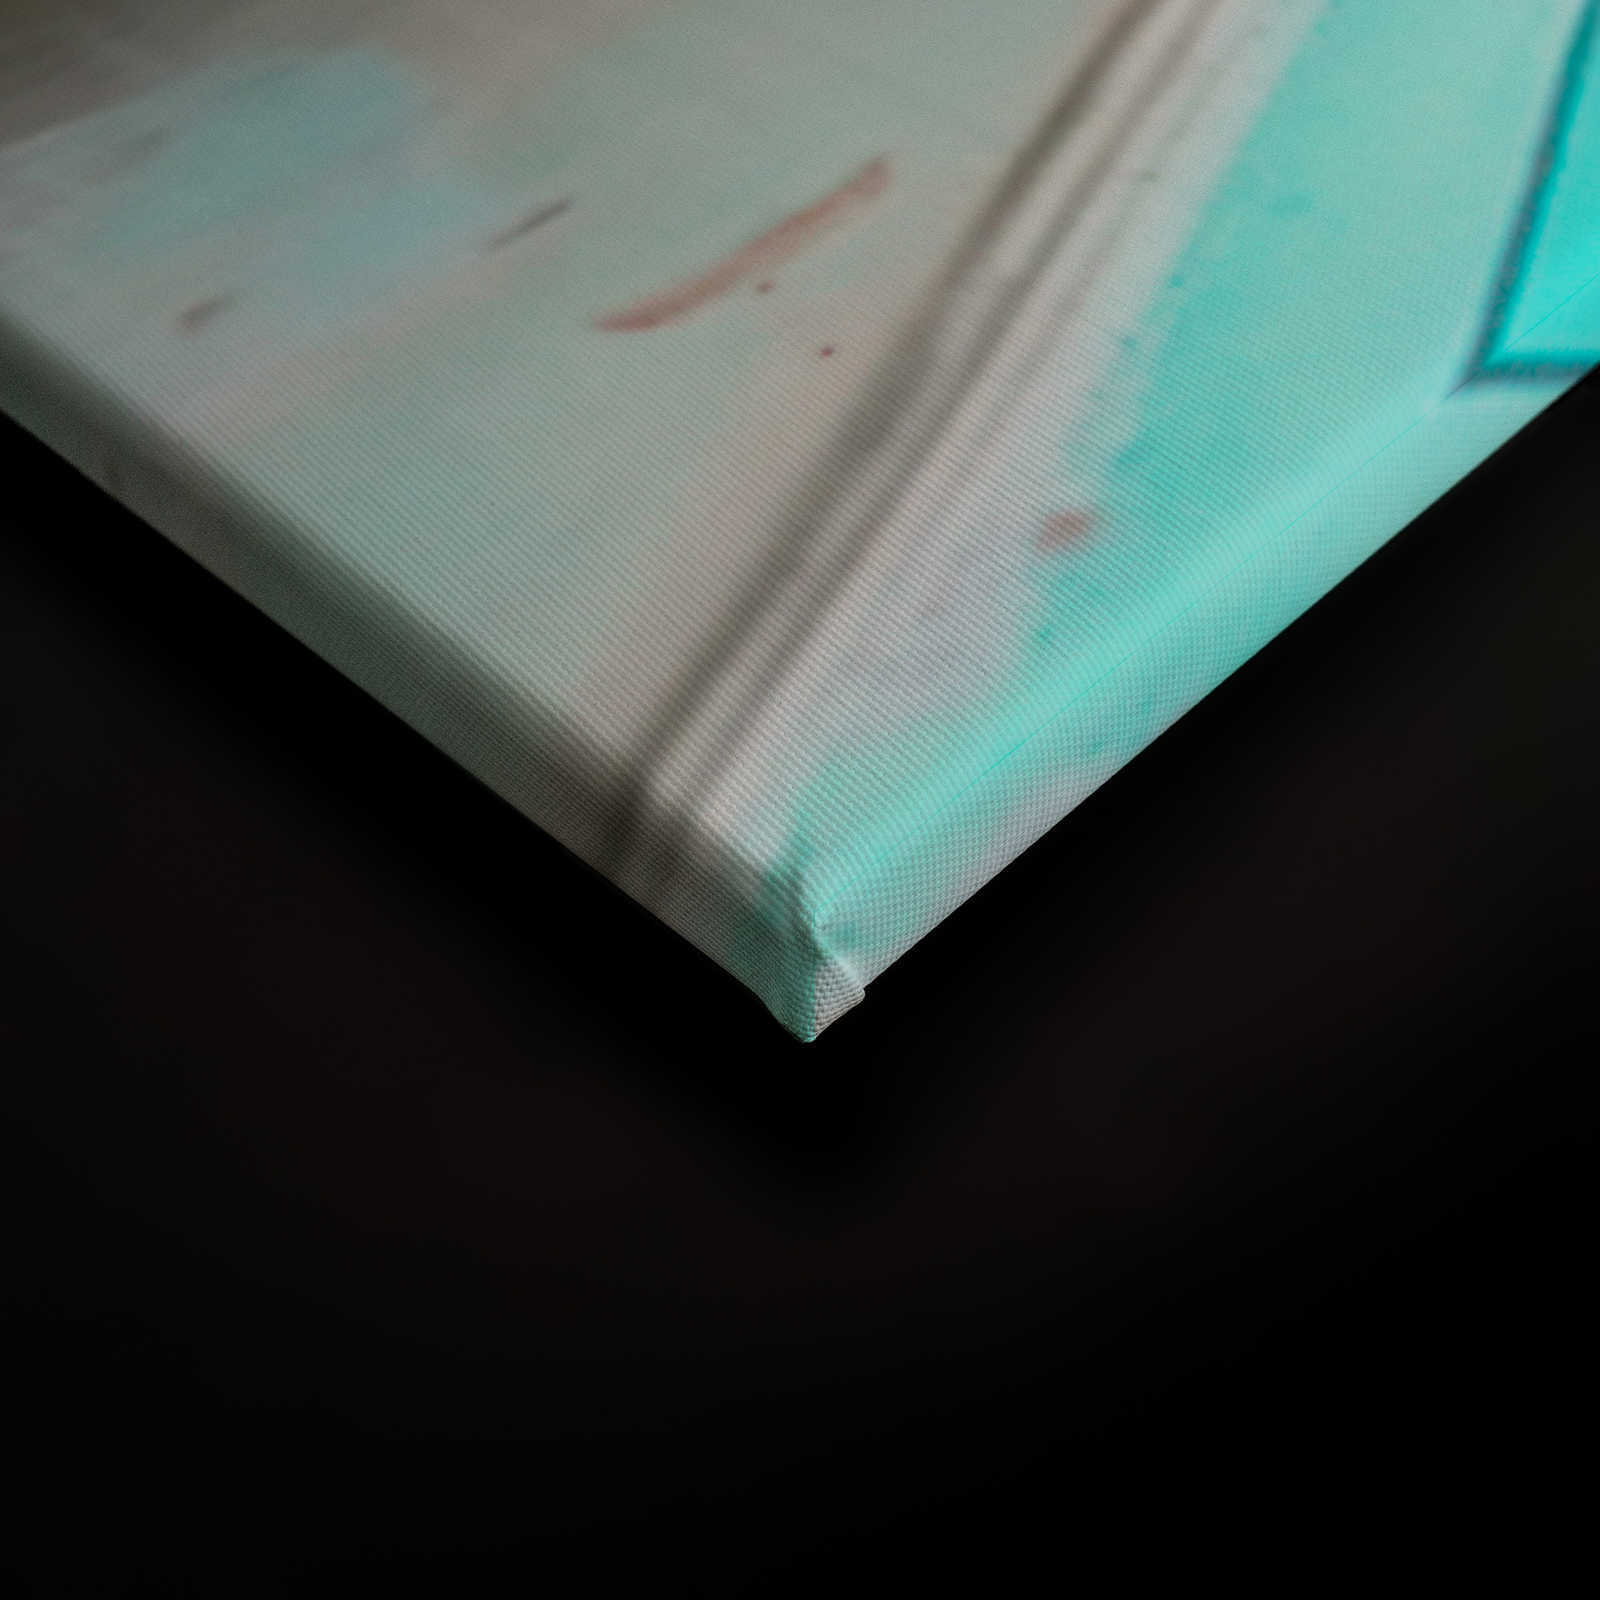             KI Canvas schilderij »icy luiaard« - 120 cm x 80 cm
        